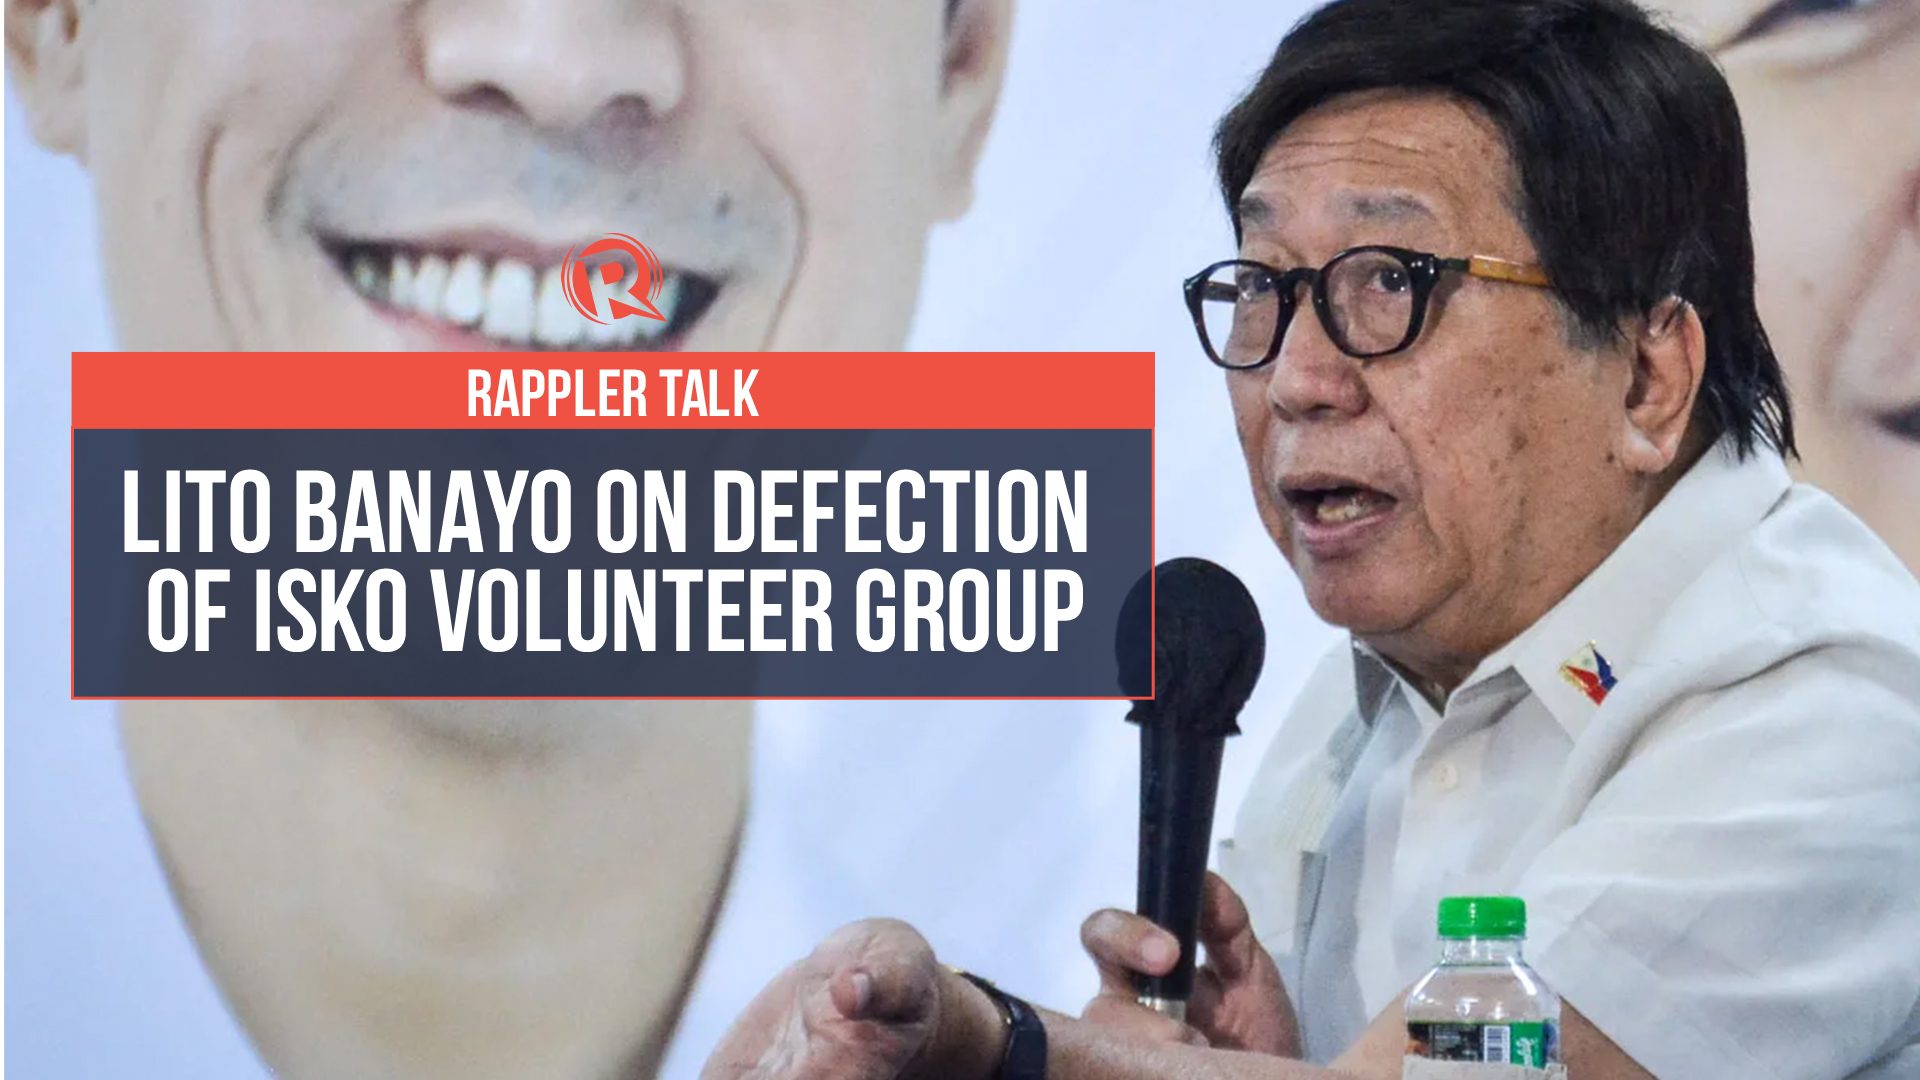 Rappler Talk: Lito Banayo on defection of Isko volunteer group